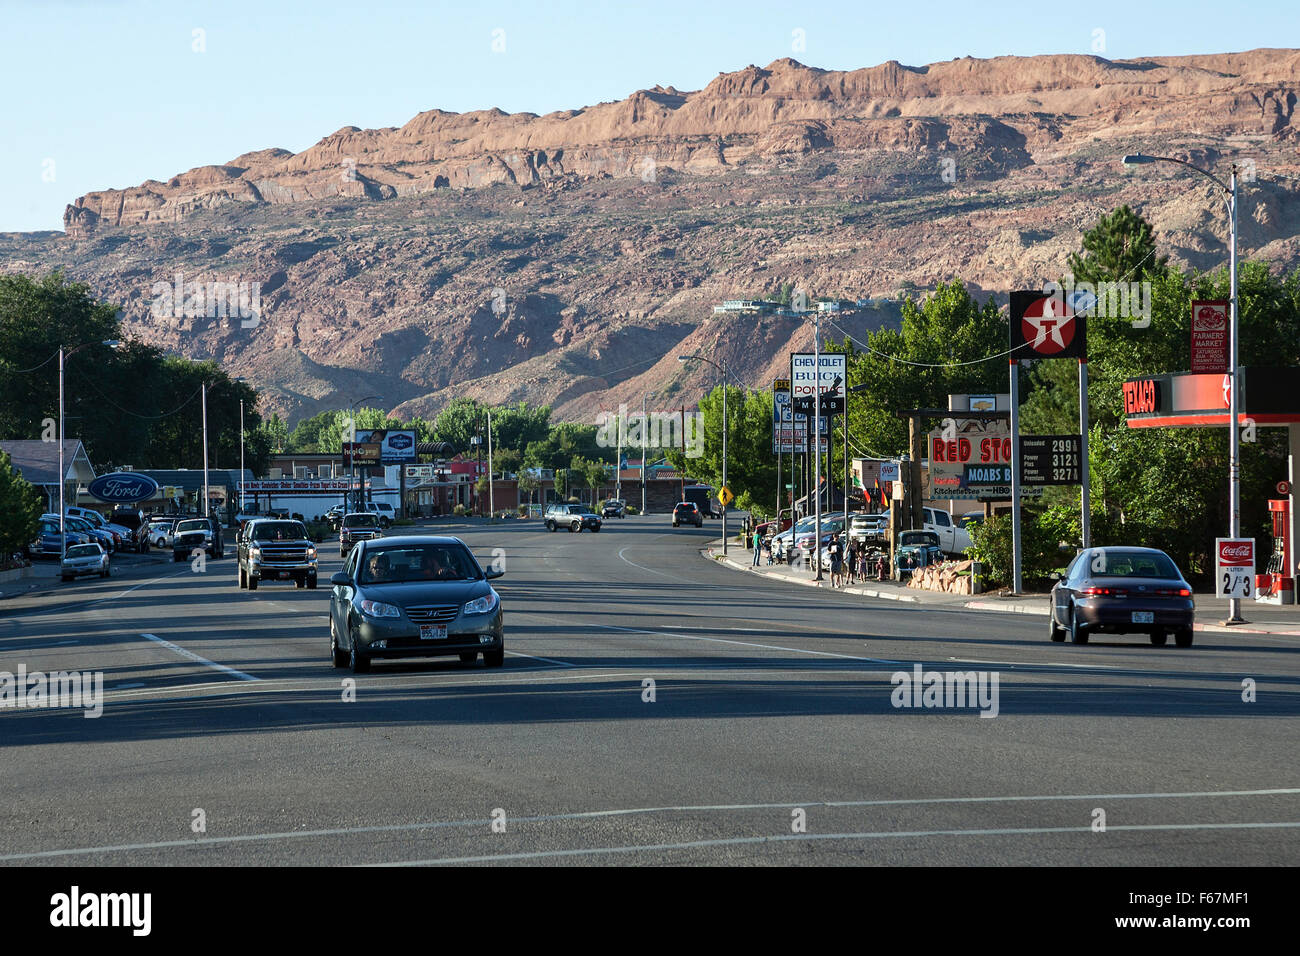 U.S. Route 191 through Moab, Utah, United States Stock Photo